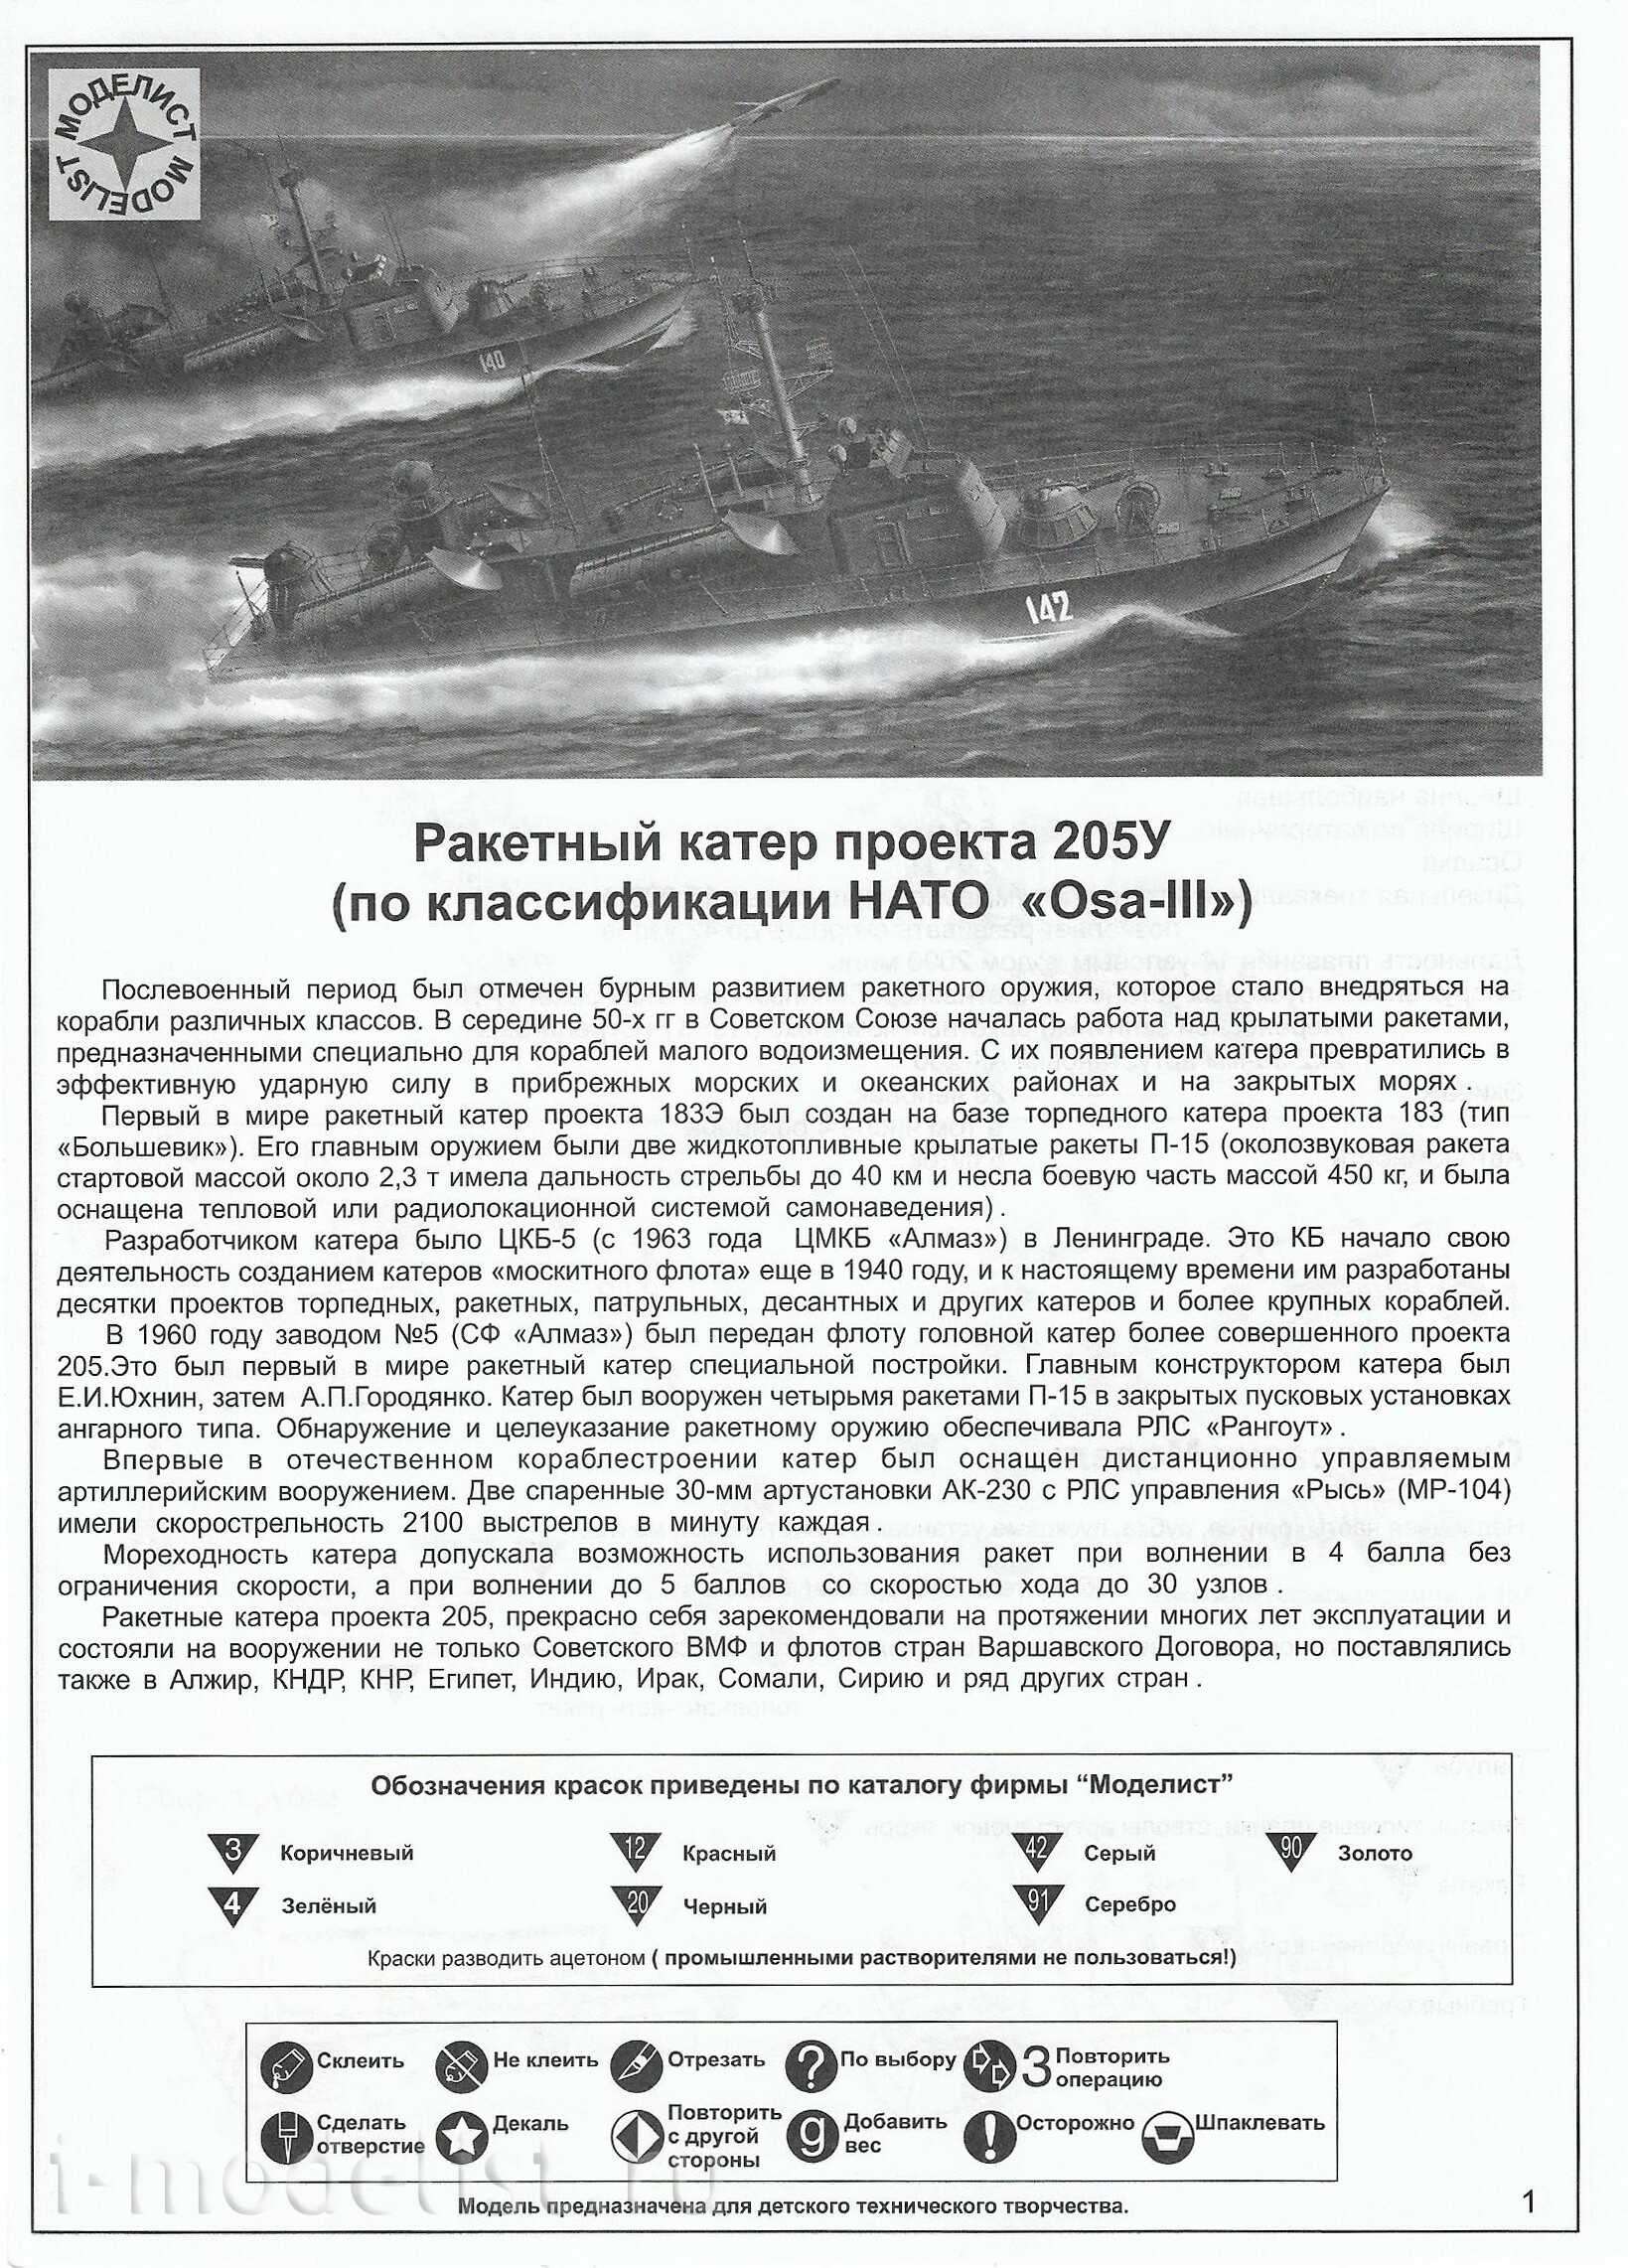 107219 Modelist length 330mm Missile boat Project 205У